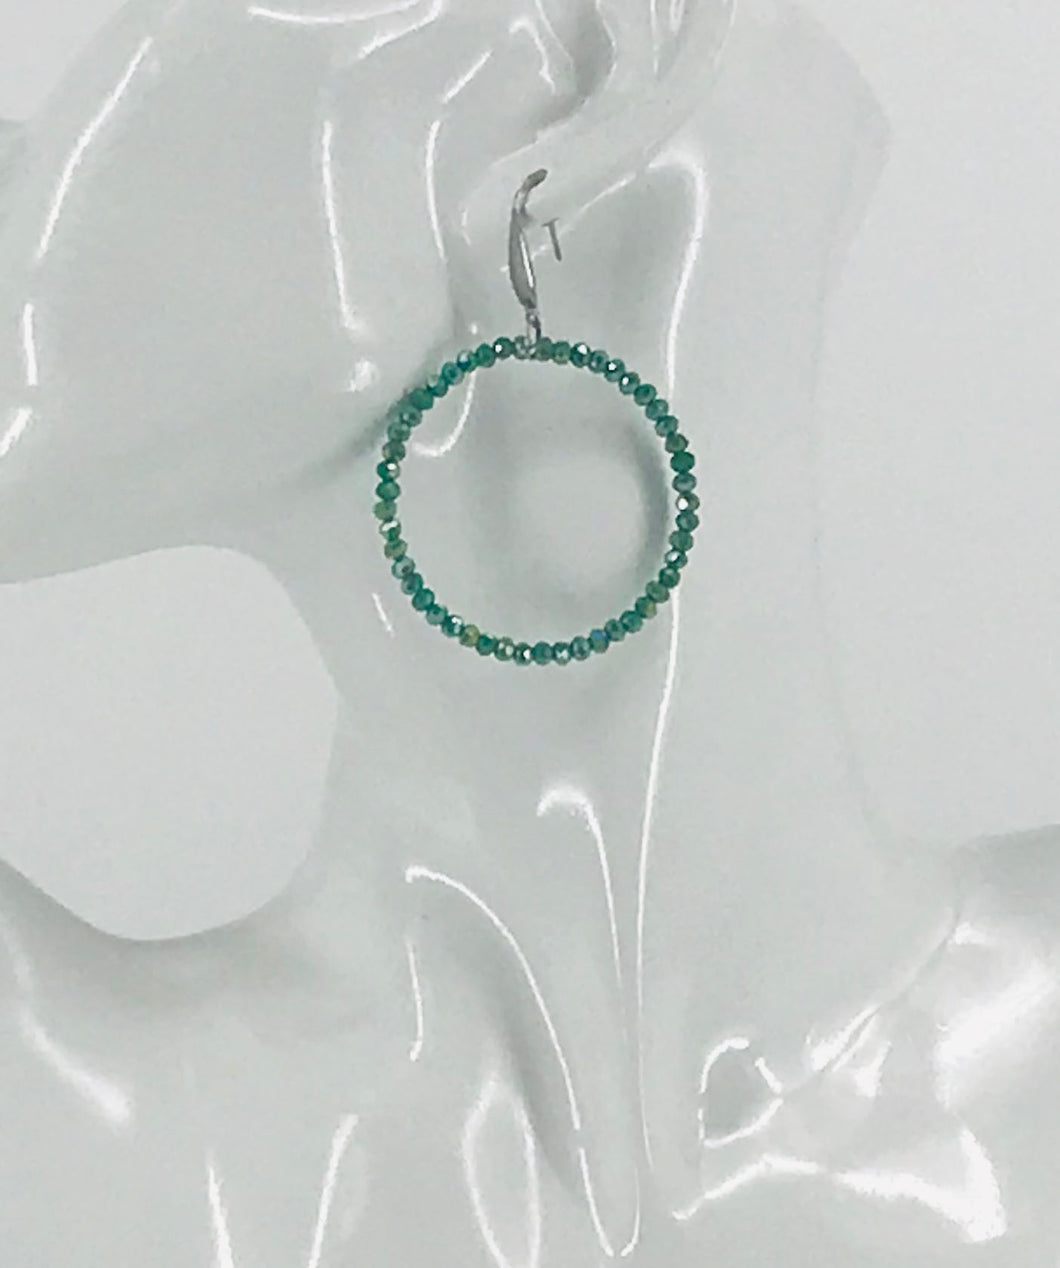 Olive Glass Bead Hoop Earrings - E19-2424